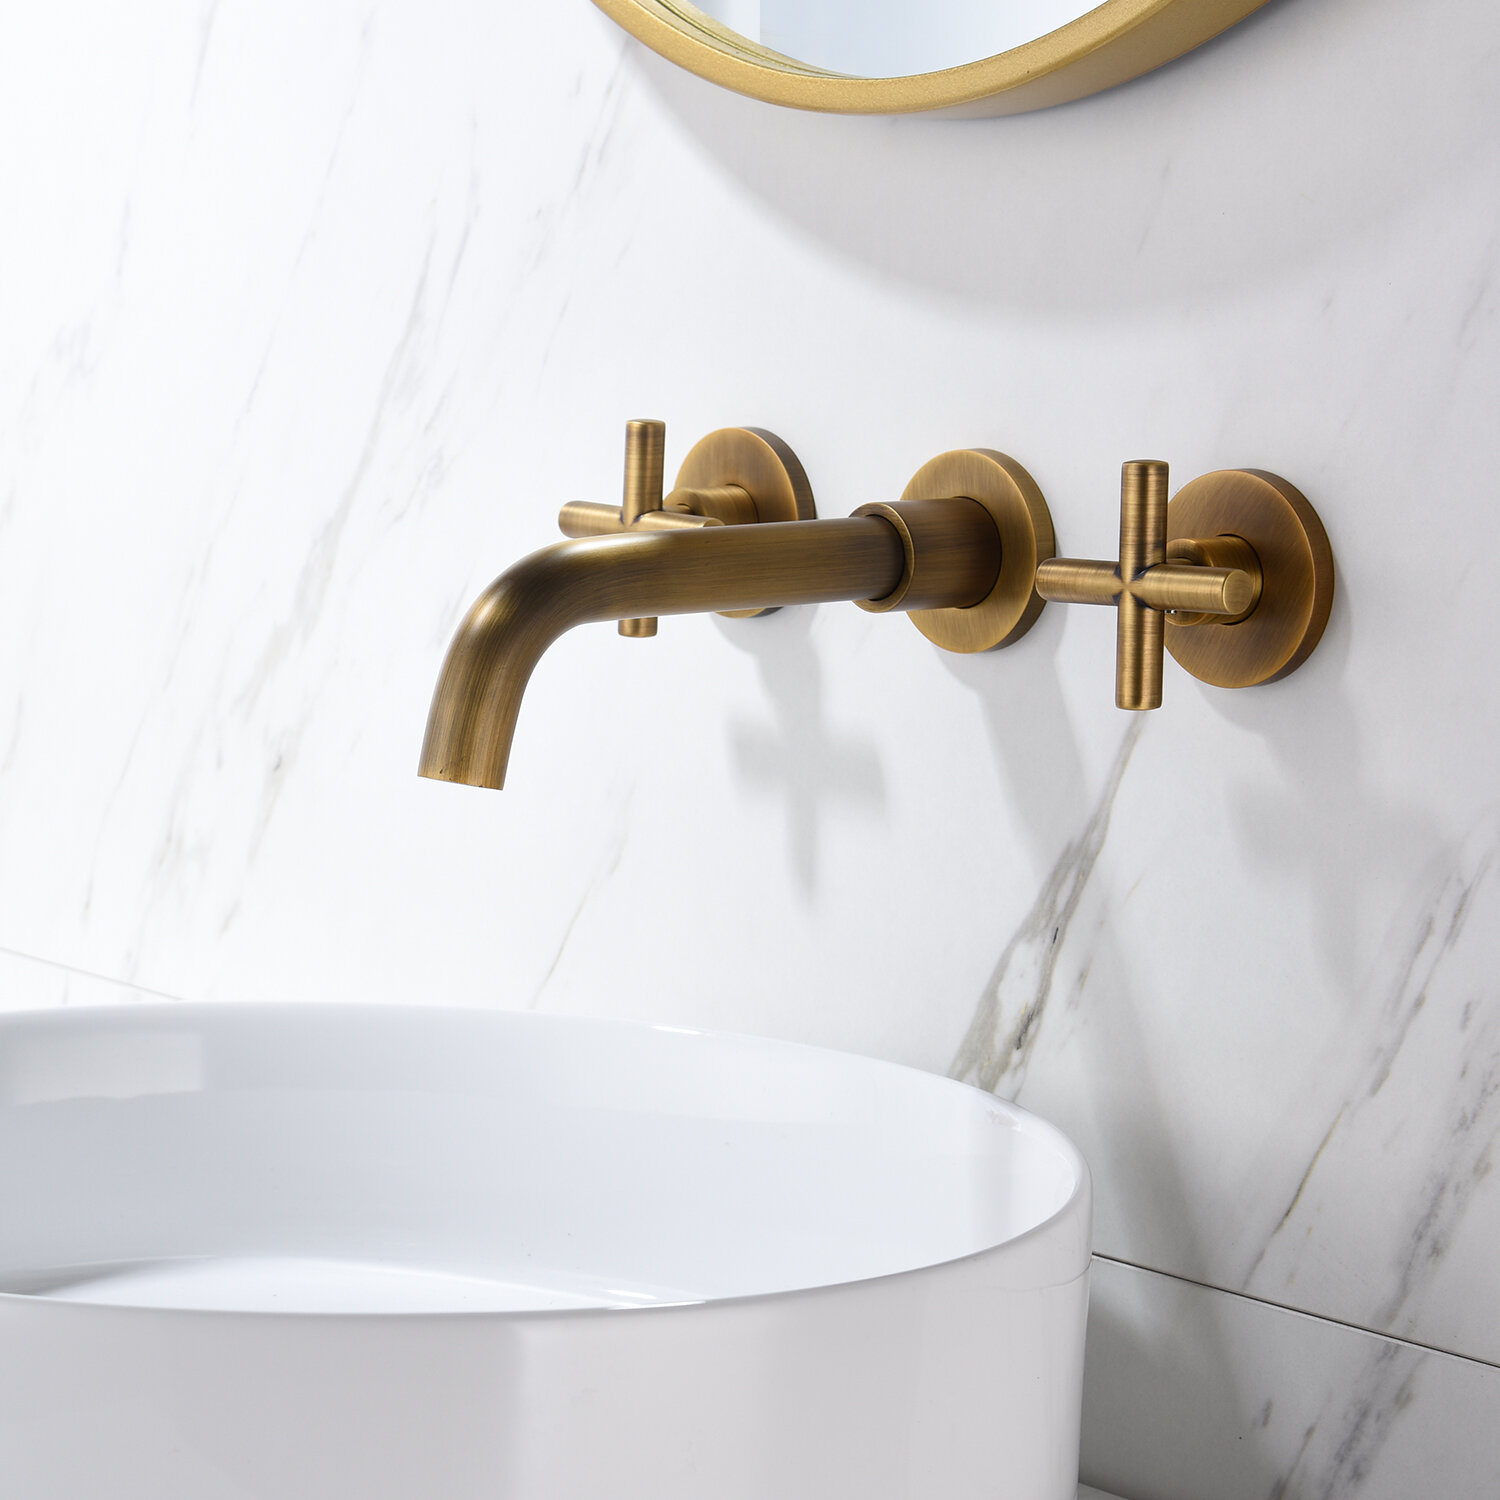 Organnice Wall Mounted Bathroom Faucet Reviews Wayfair